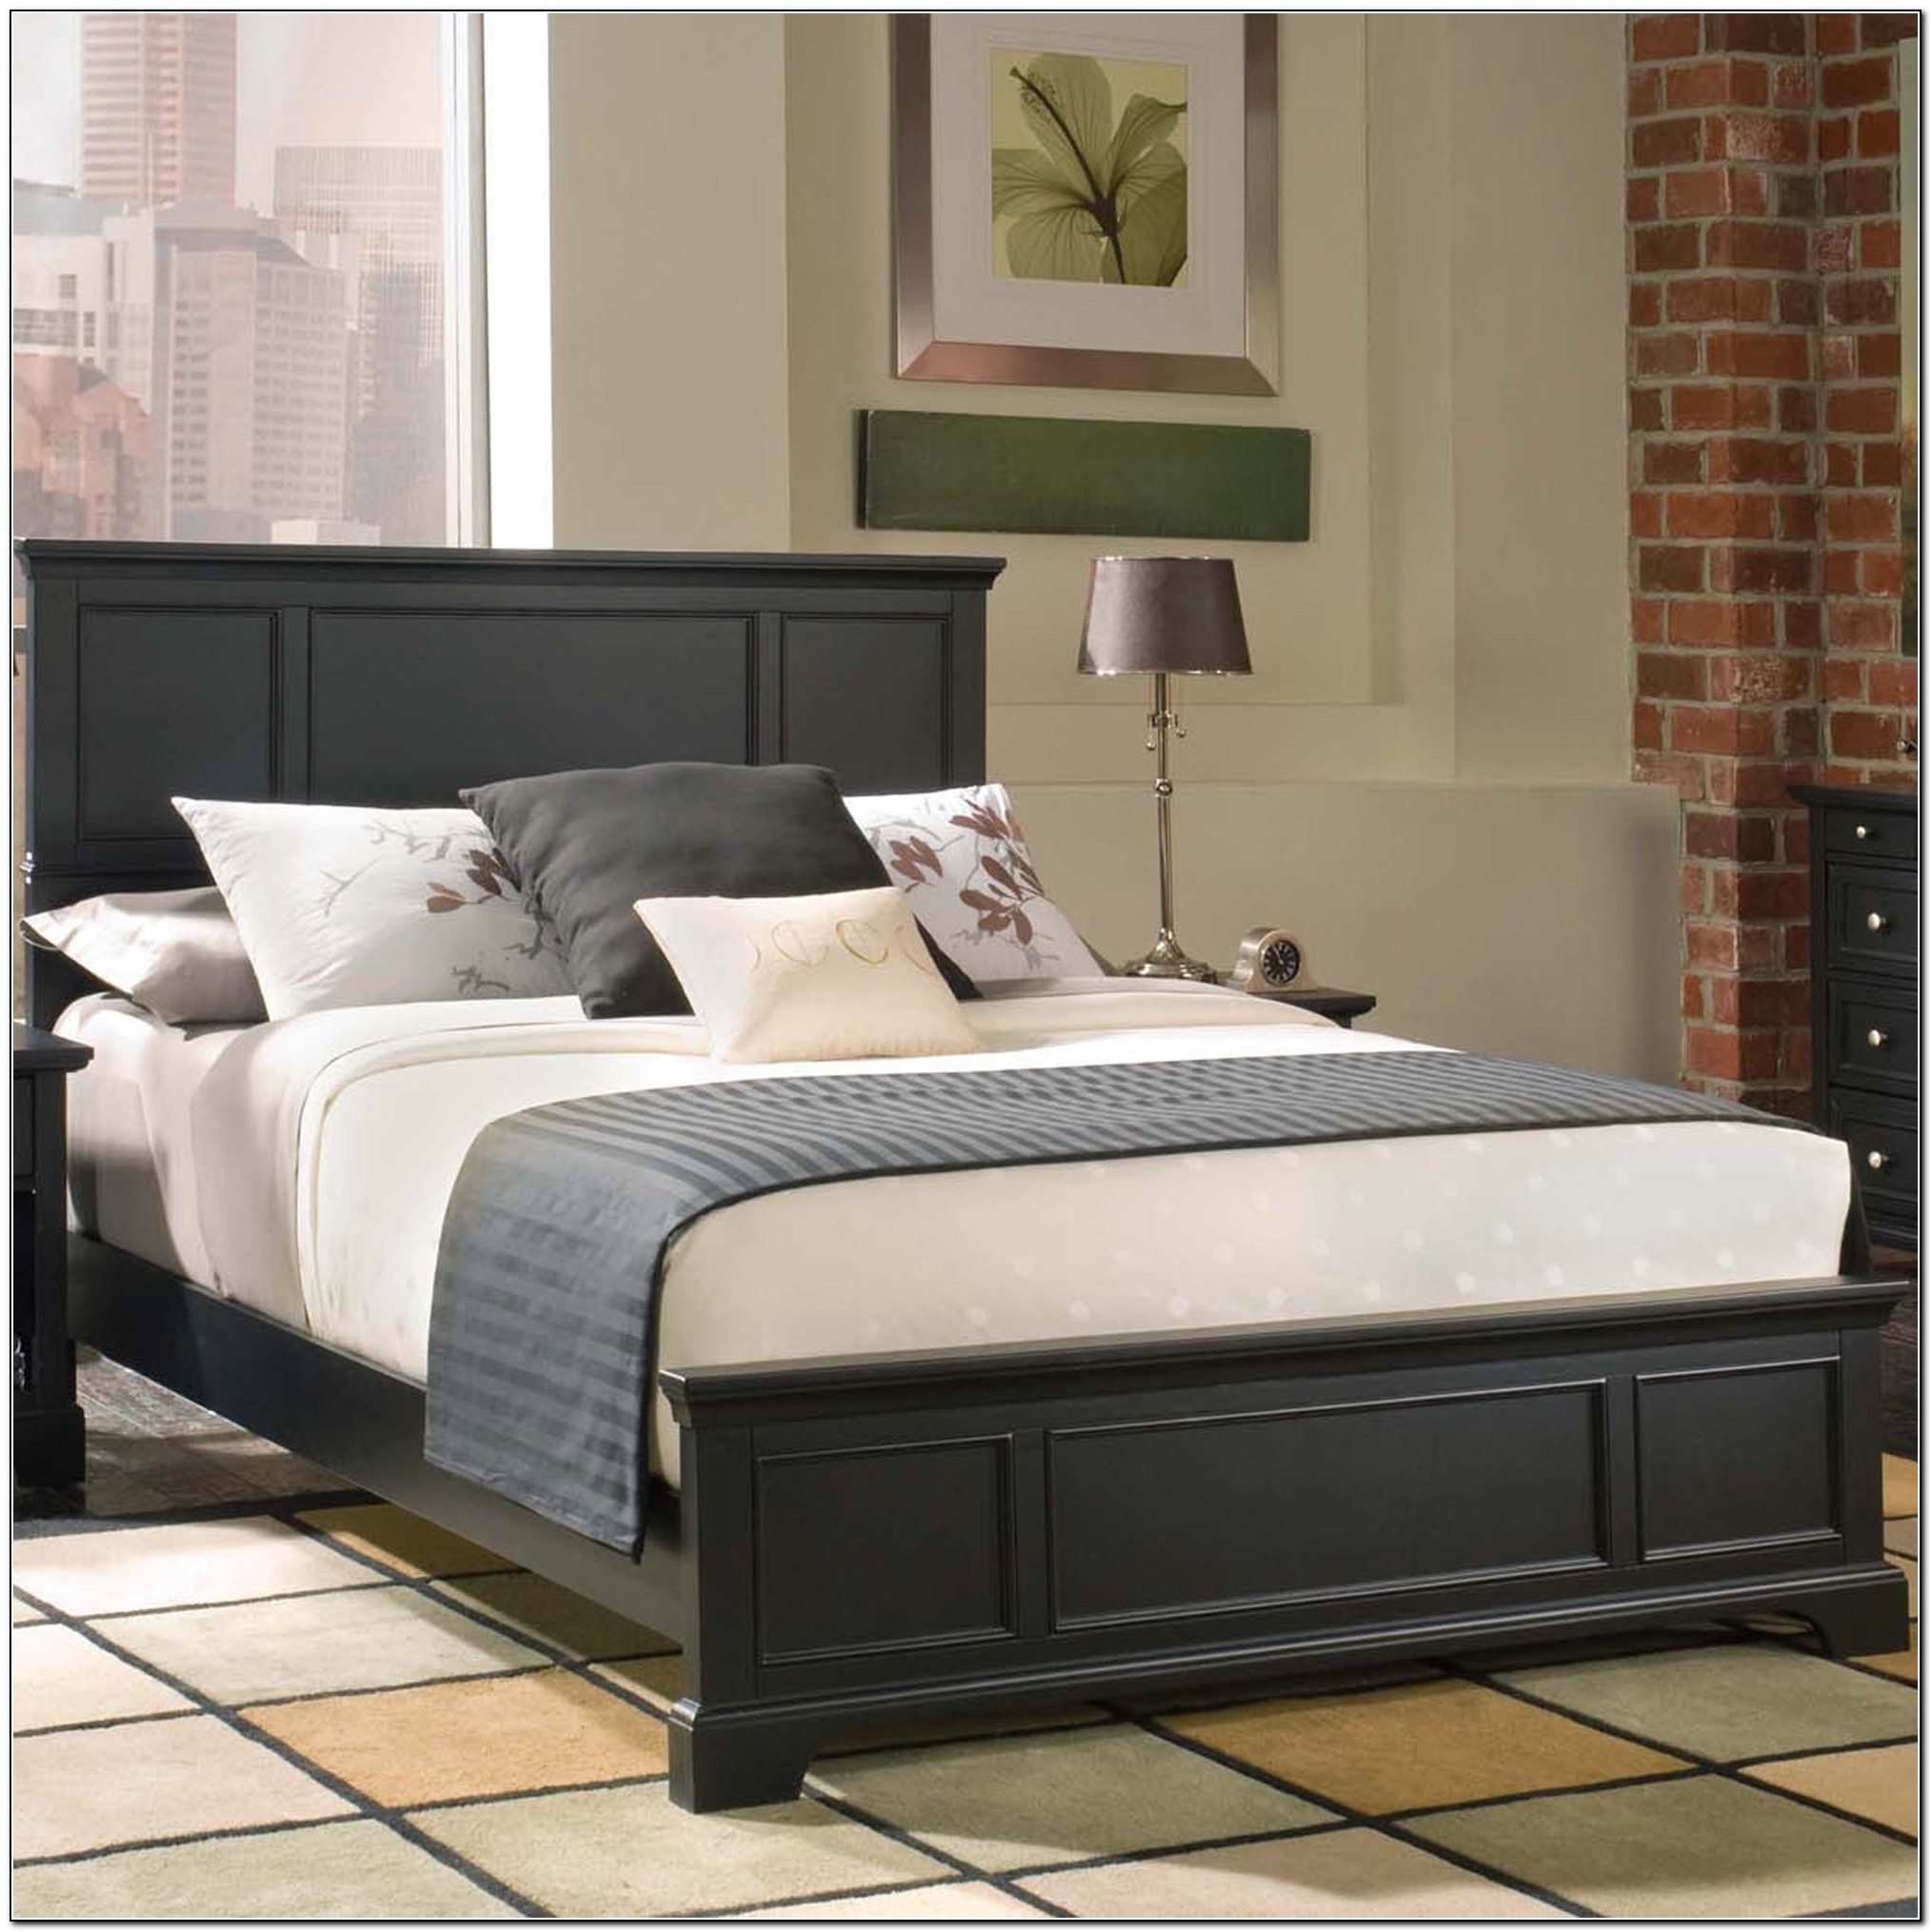 Wood Queen Bed Frames - Beds : Home Design Ideas #yaQO0V3POj4902